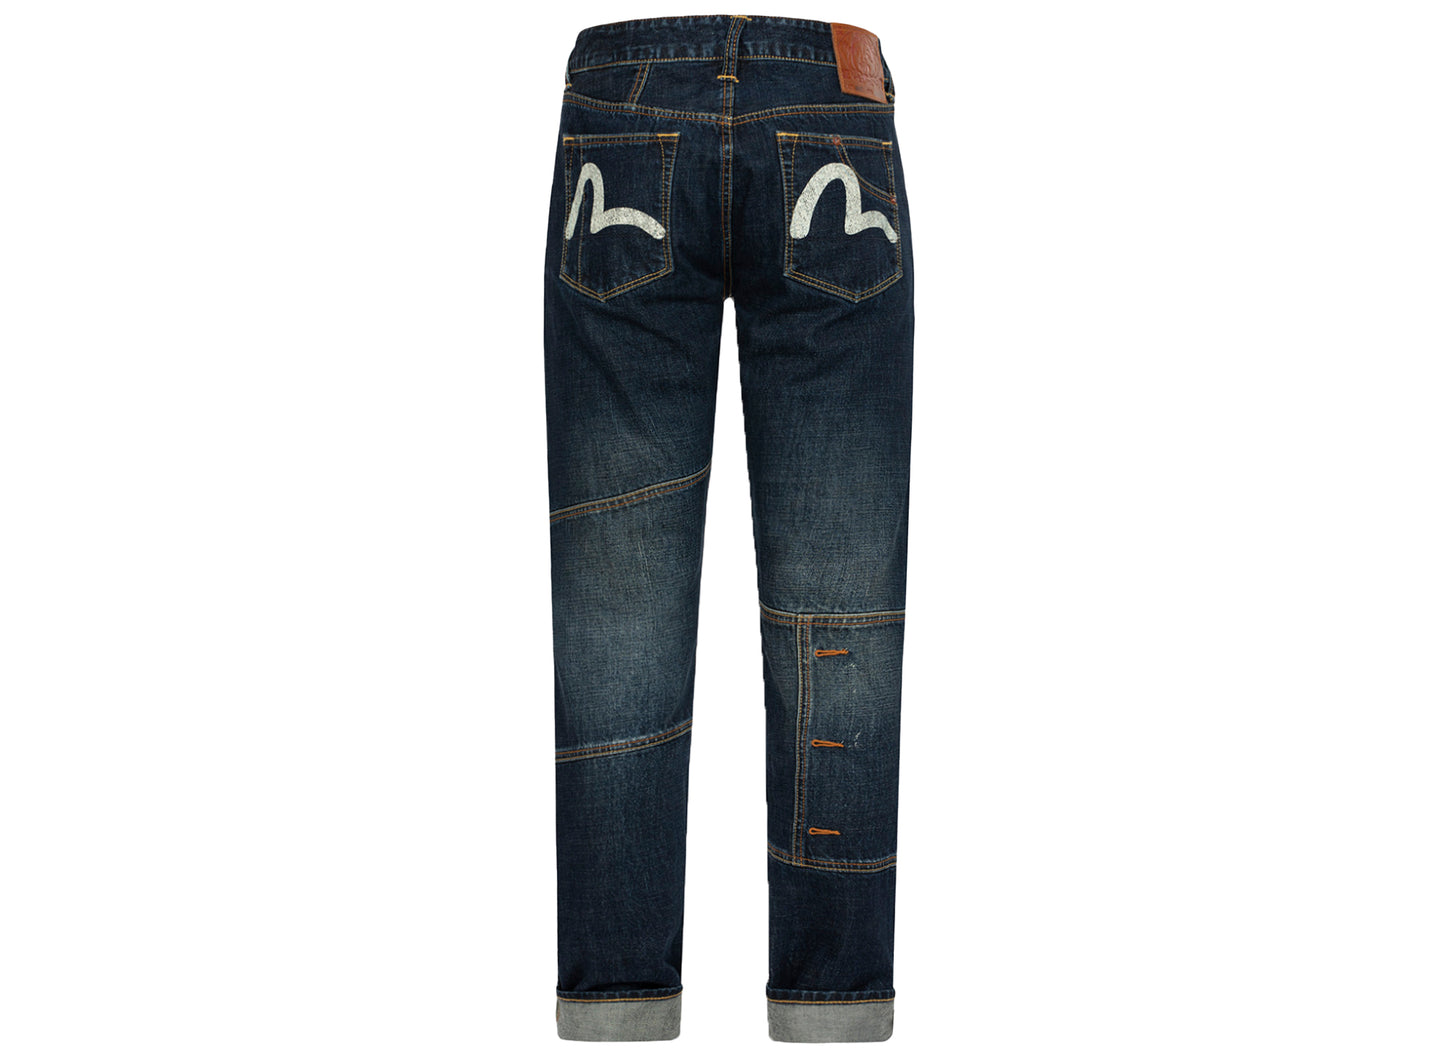 Evisu Seagull Print Carrot Fit Deconstructed Selvedge Denim Jeans